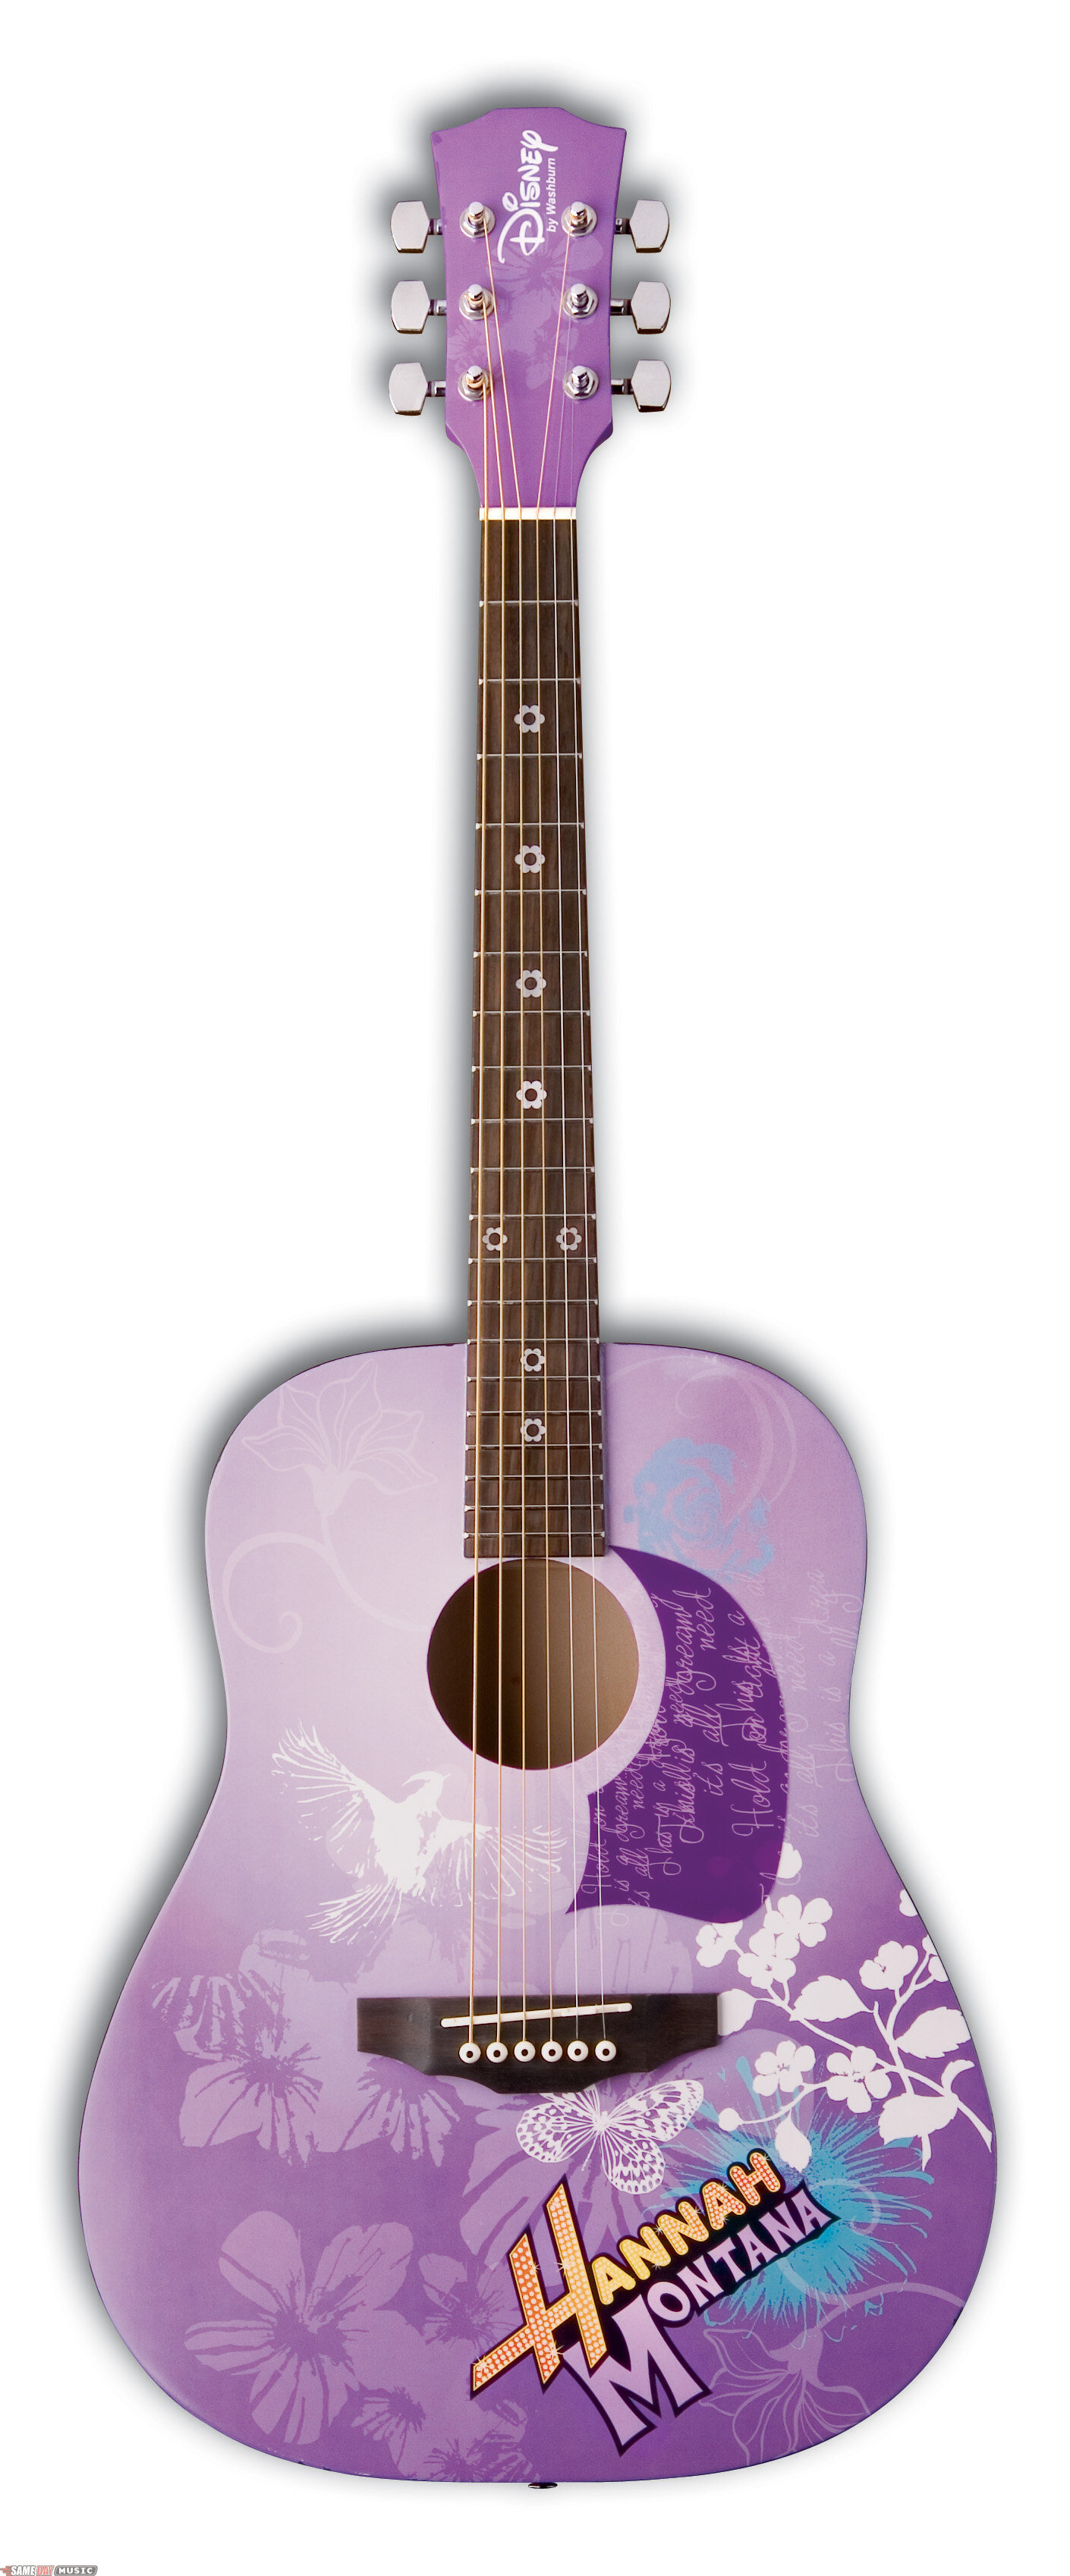 Hannah Montana Guitar HMDA34Guitar_highres-1198c57dfffb7d102539166fc29fef3e